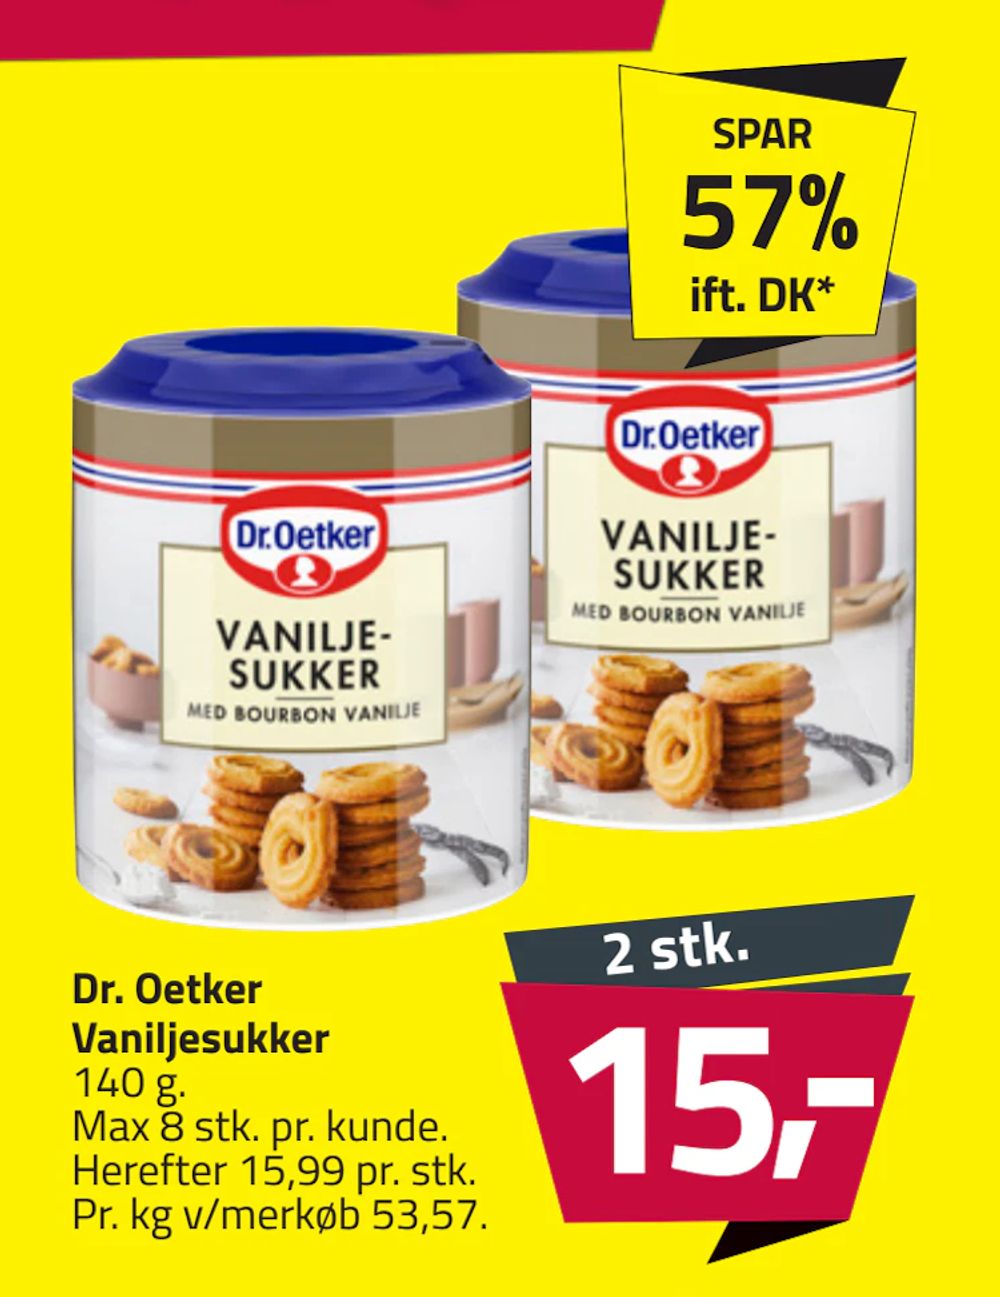 Tilbud på Dr. Oetker Vaniljesukker fra Fleggaard til 15 kr.